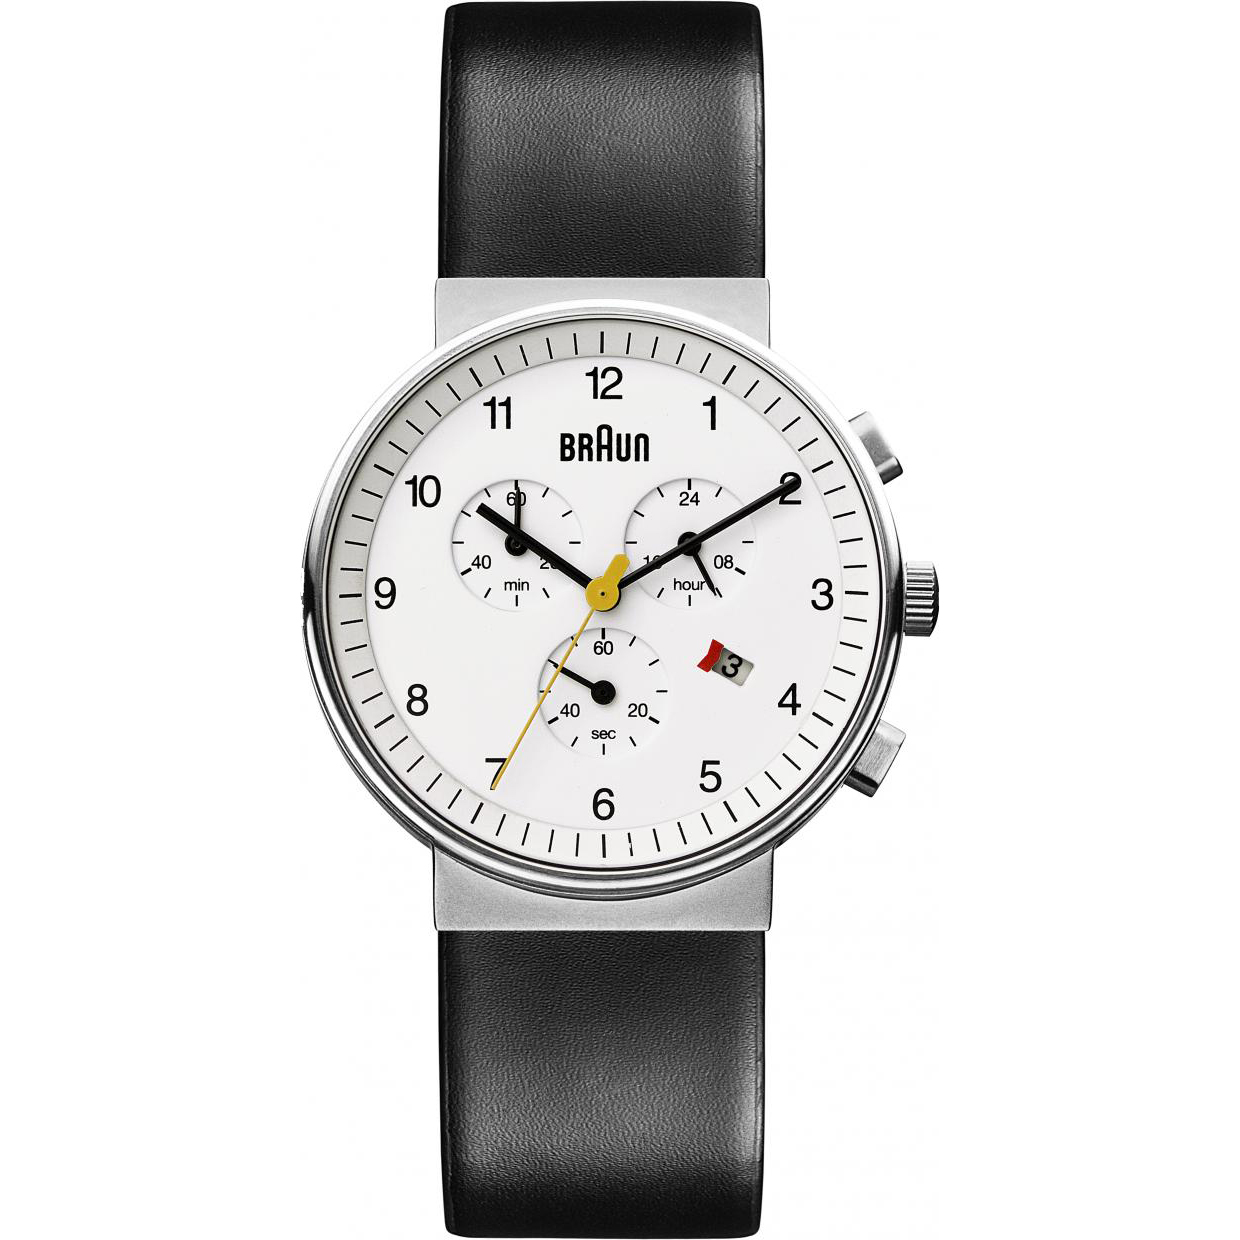 The restaurateur’s Braun watch is a reproduction of a 1960s Dieter Rams design. $300, braun-clocks.com